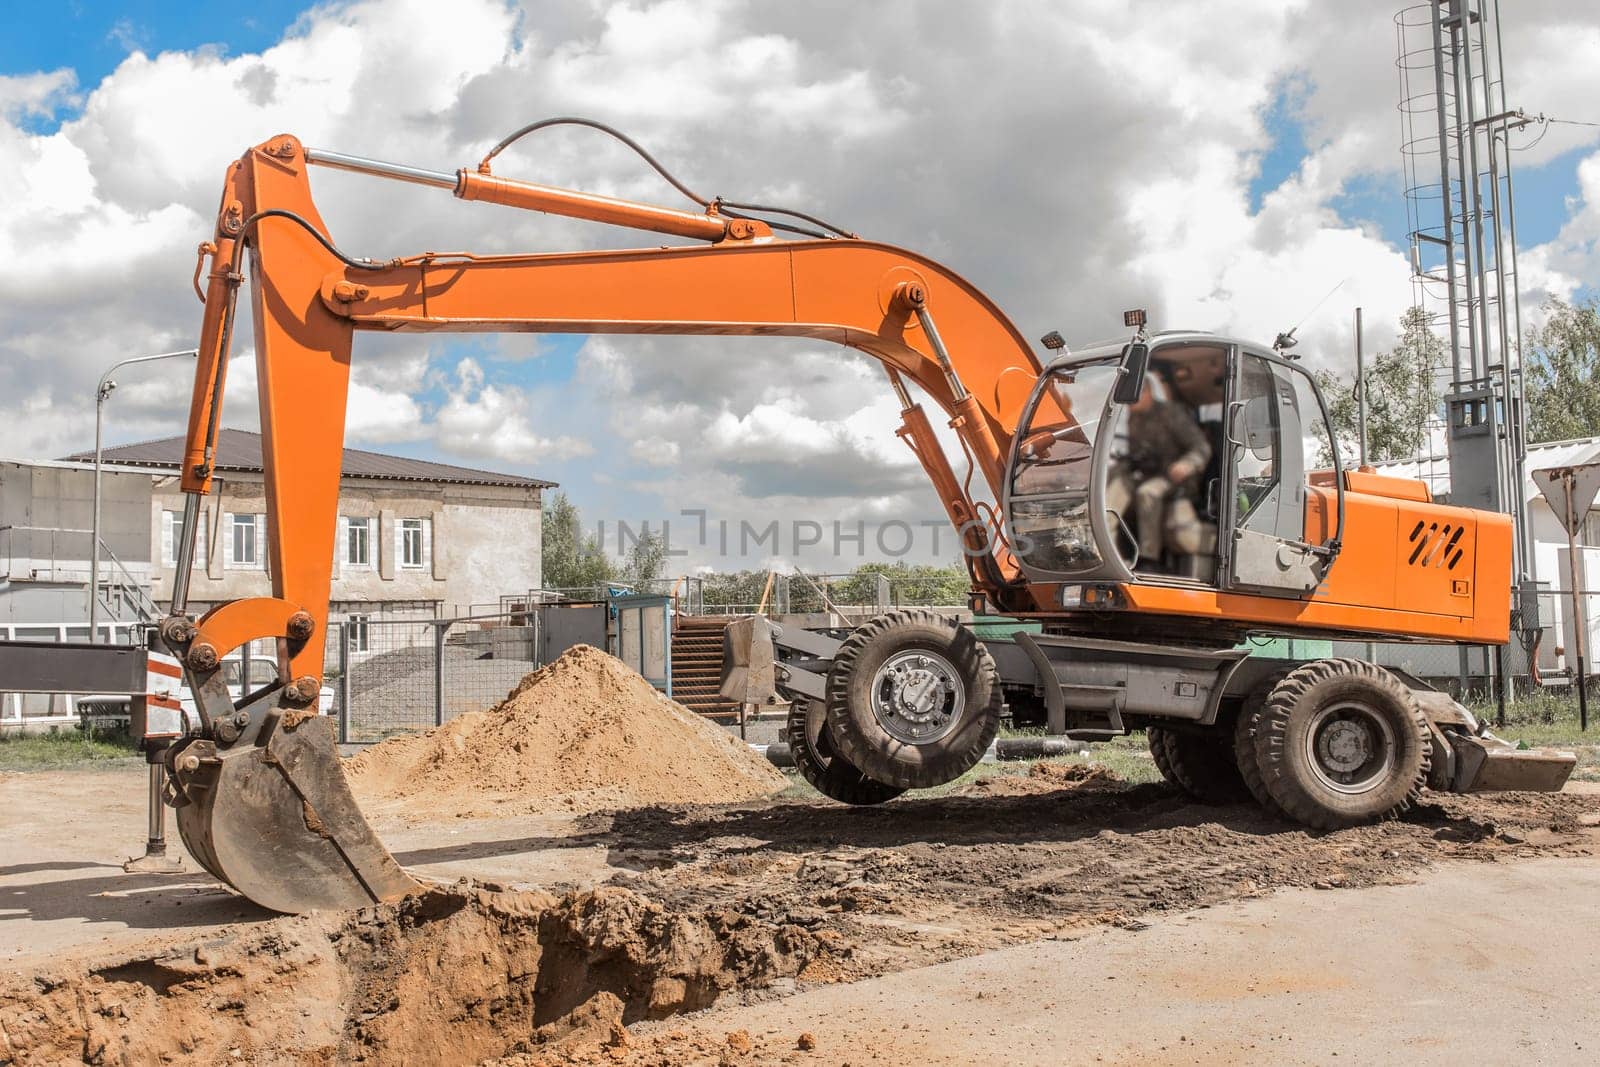 Excavator Industrial Heavy Machine Digging Equipment Mechanical Hydraulic Stability Balance Stabilization on Construction Site Work by AYDO8